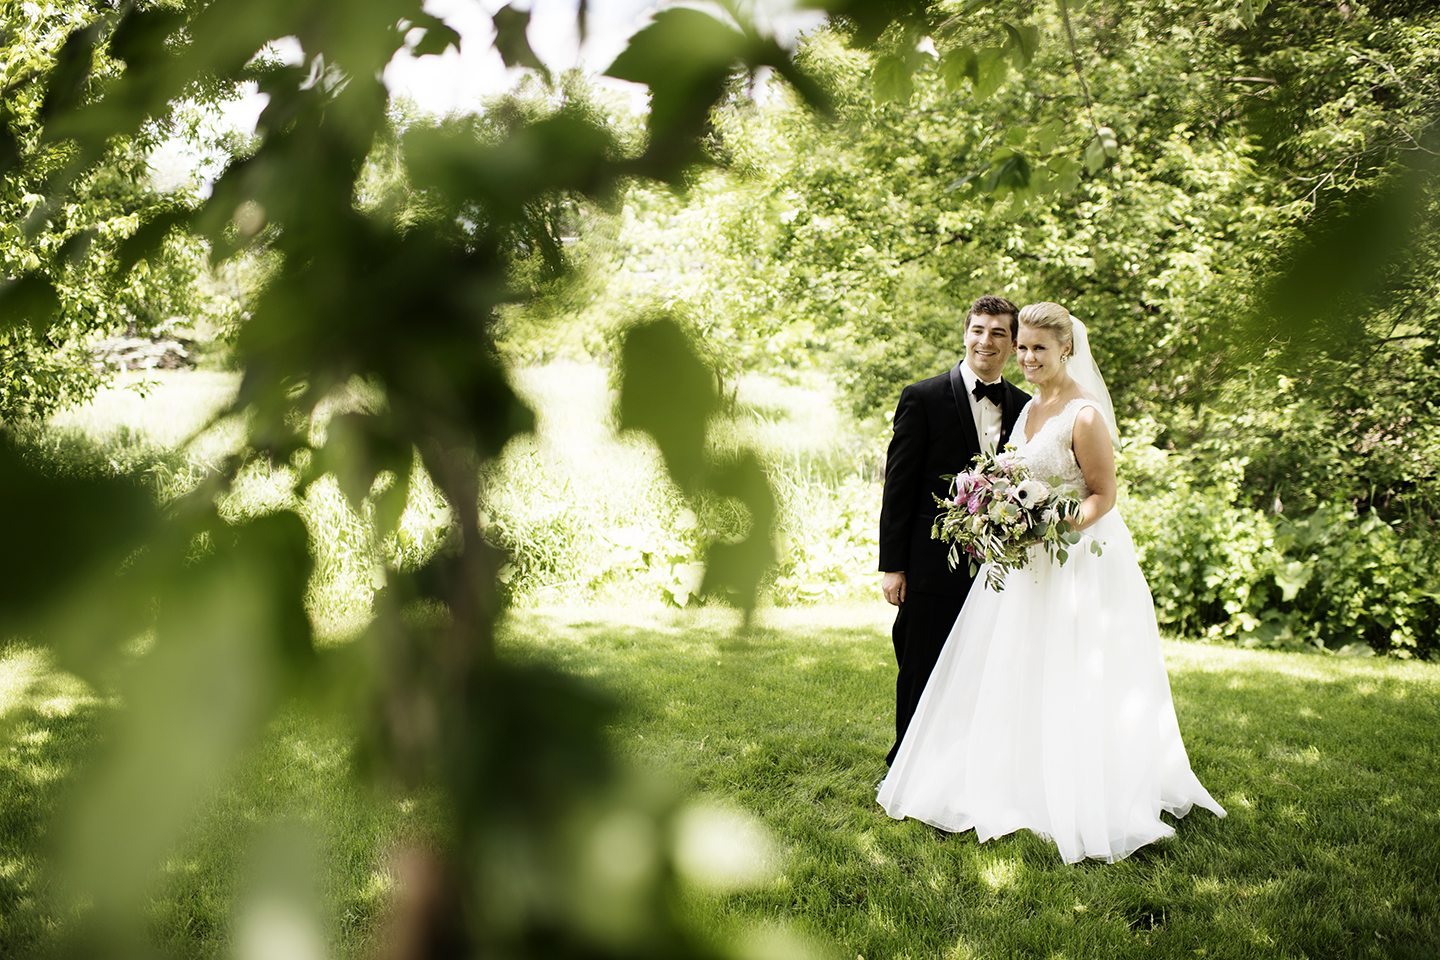 MN Wedding Photographer | Photogen Inc. | Eliesa Johnson | Based in Minneapolis